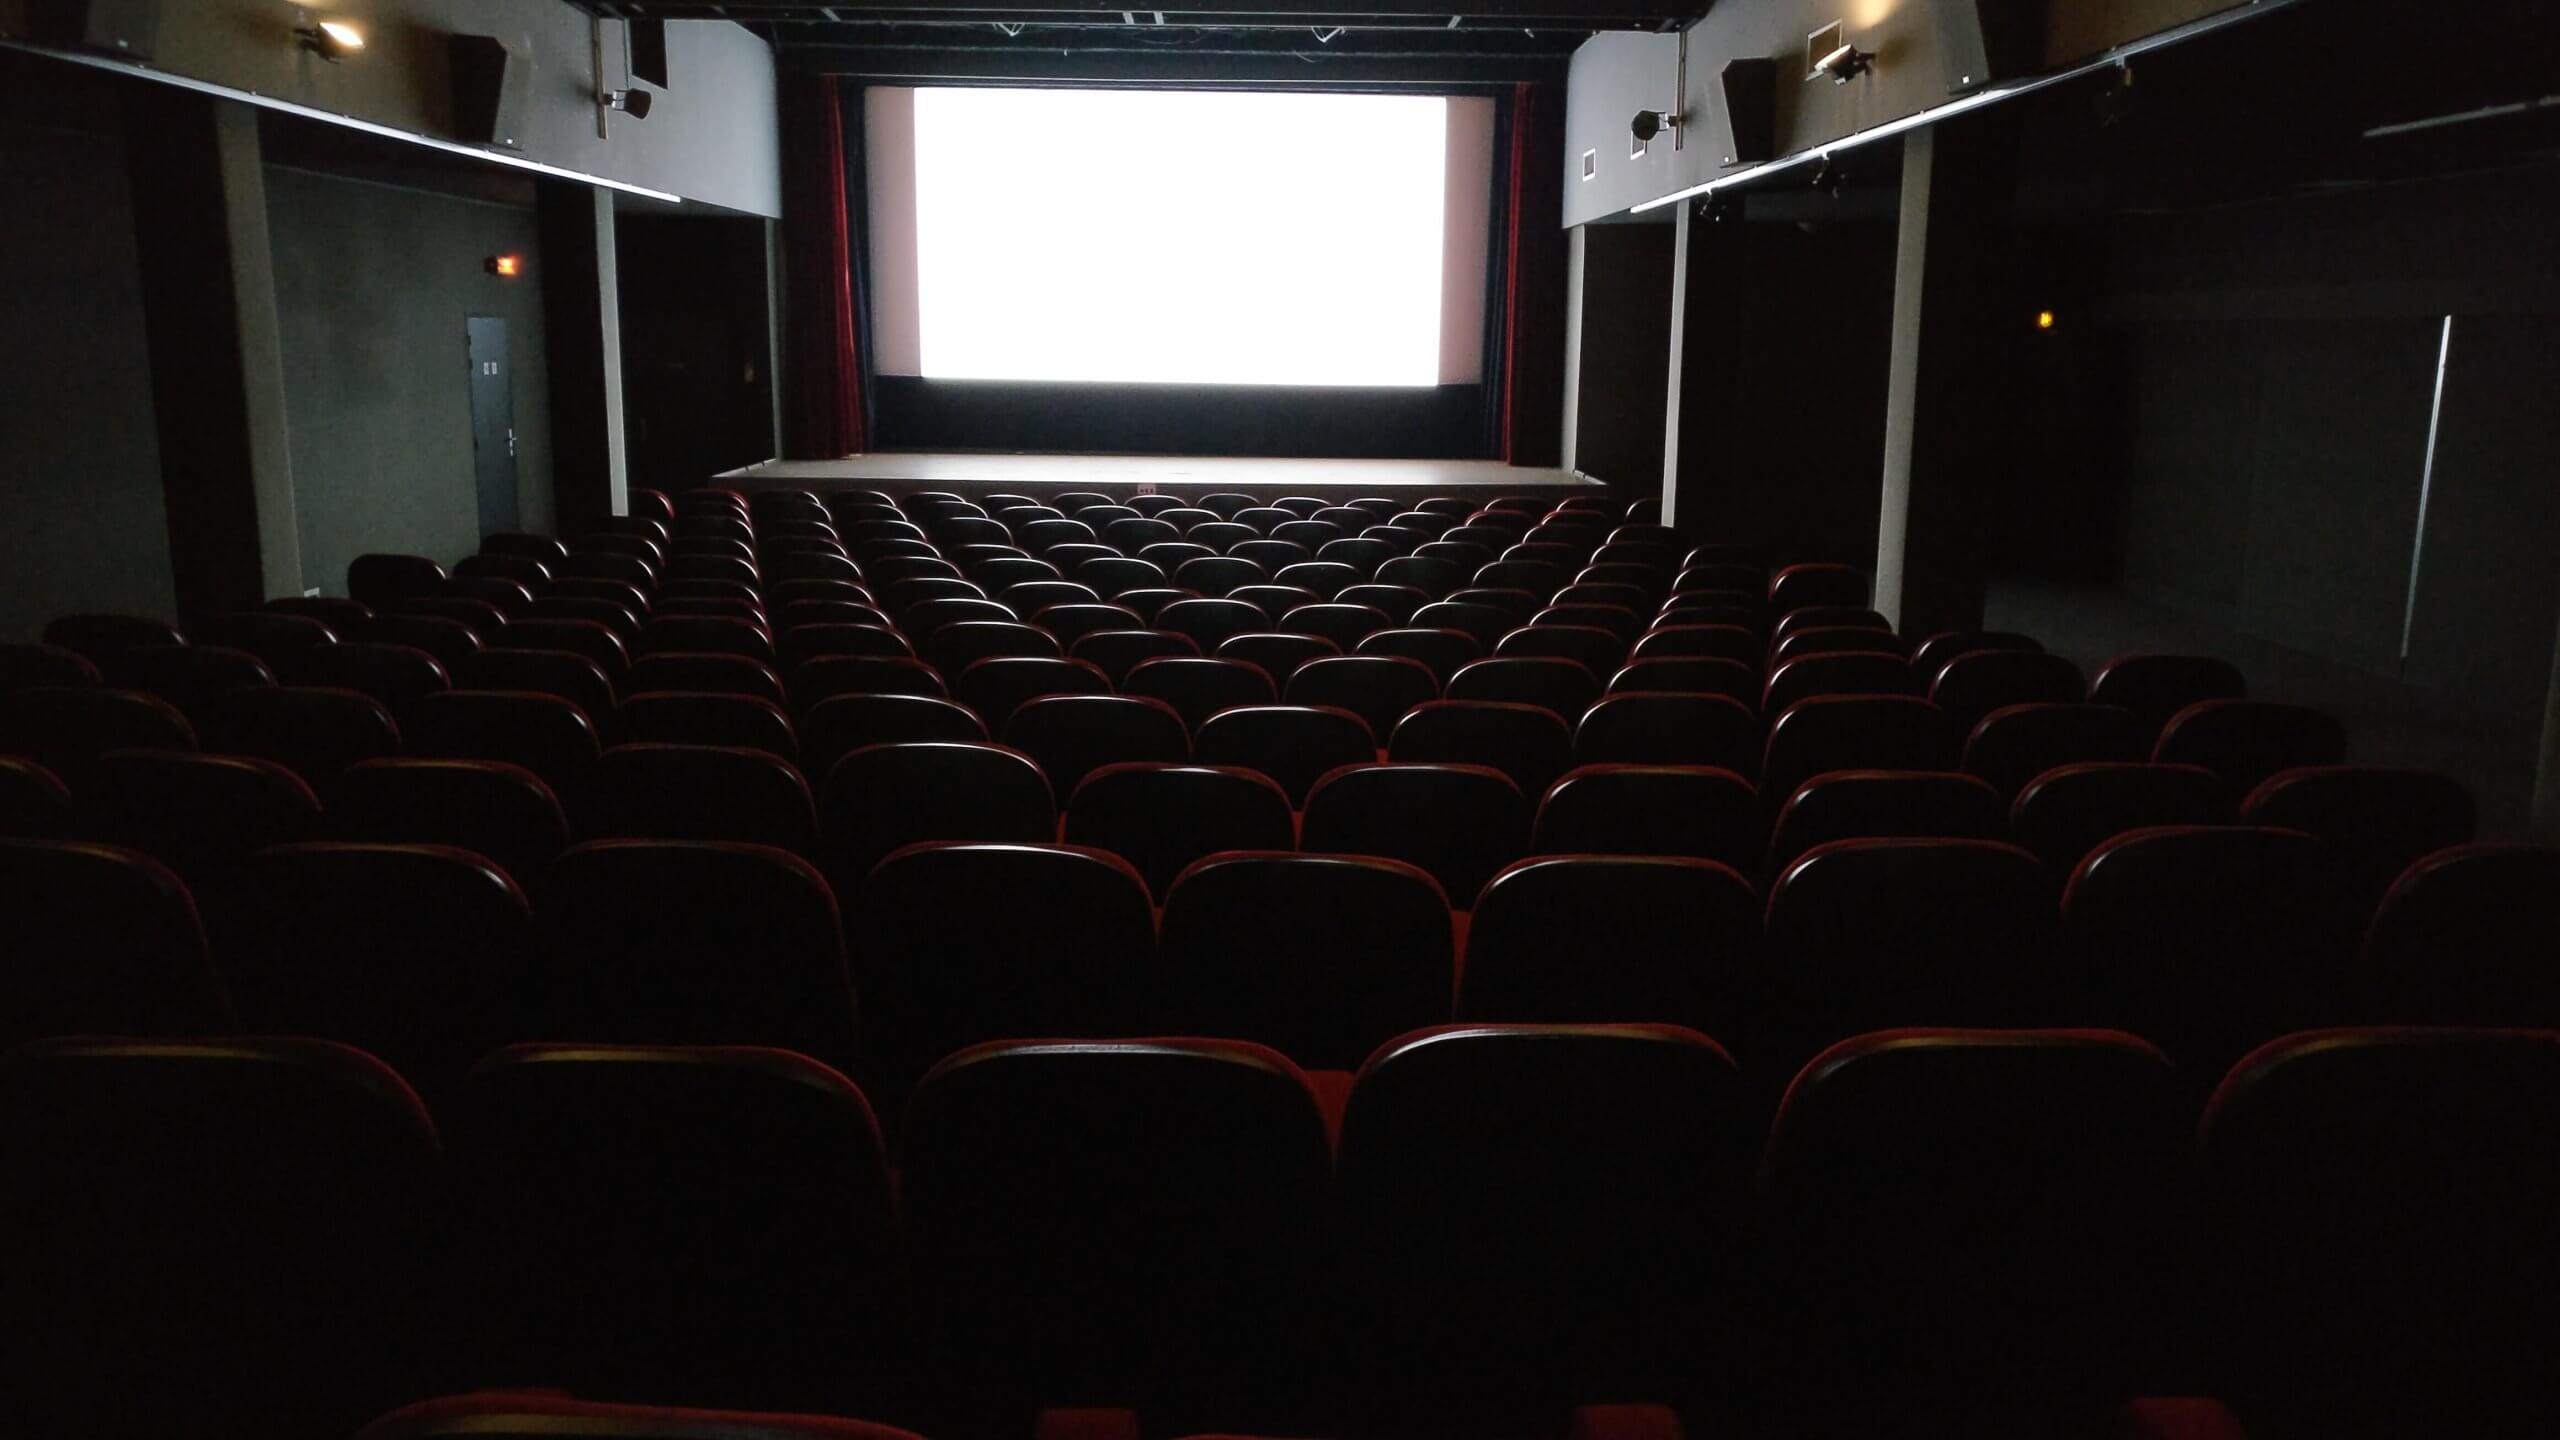 sala de cinema vazia